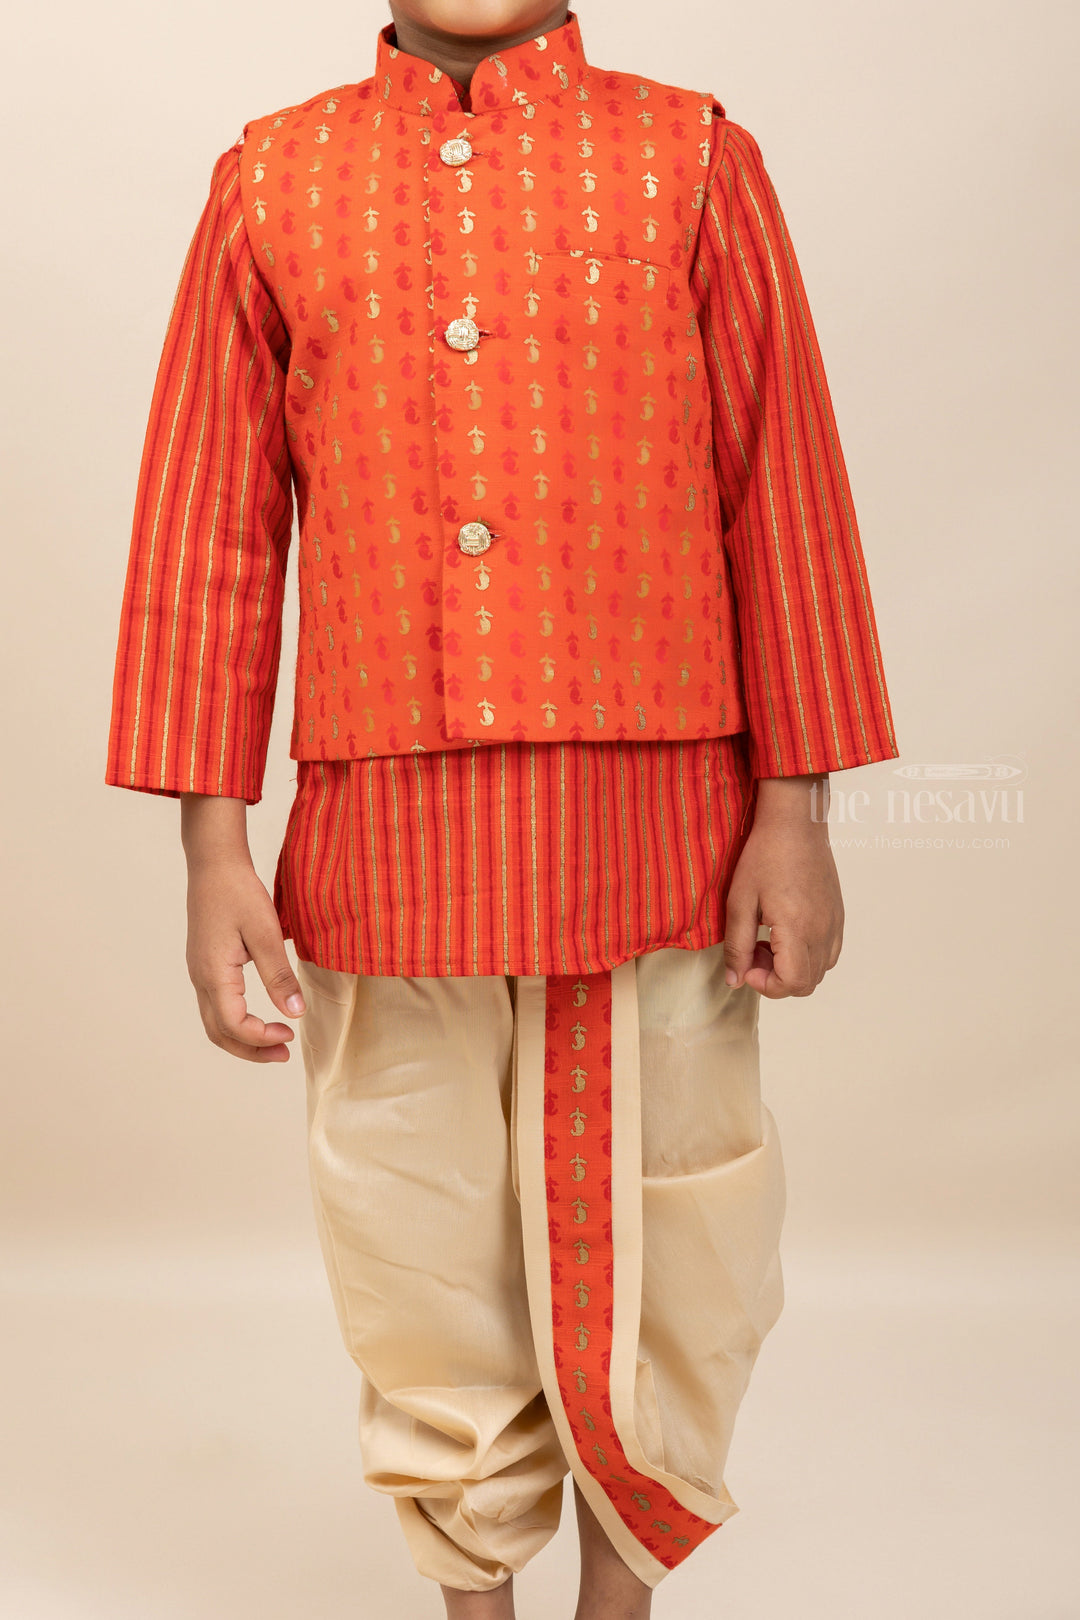 The Nesavu Ethnic Sets Opulent Orange Red Kurta With Overcoat And Half-White Dhoti For Little Boys psr silks Nesavu